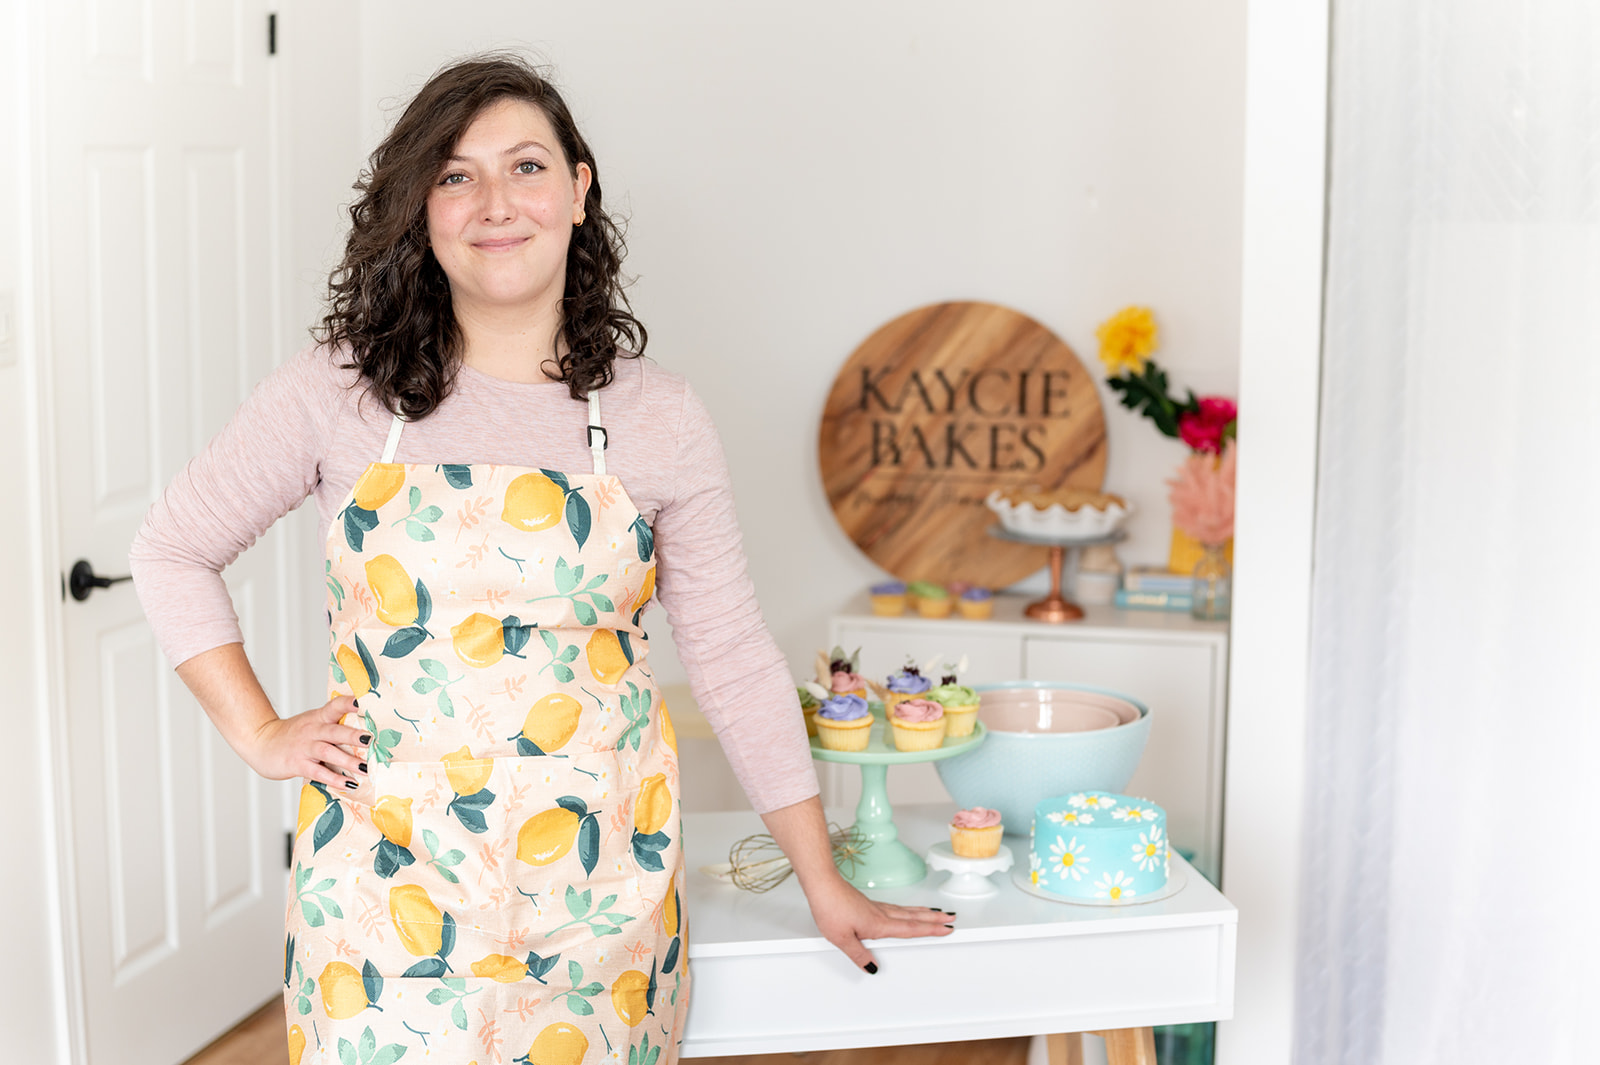 Branding photoshoot for local Ottawa modern home bakery Kaycie Bakes